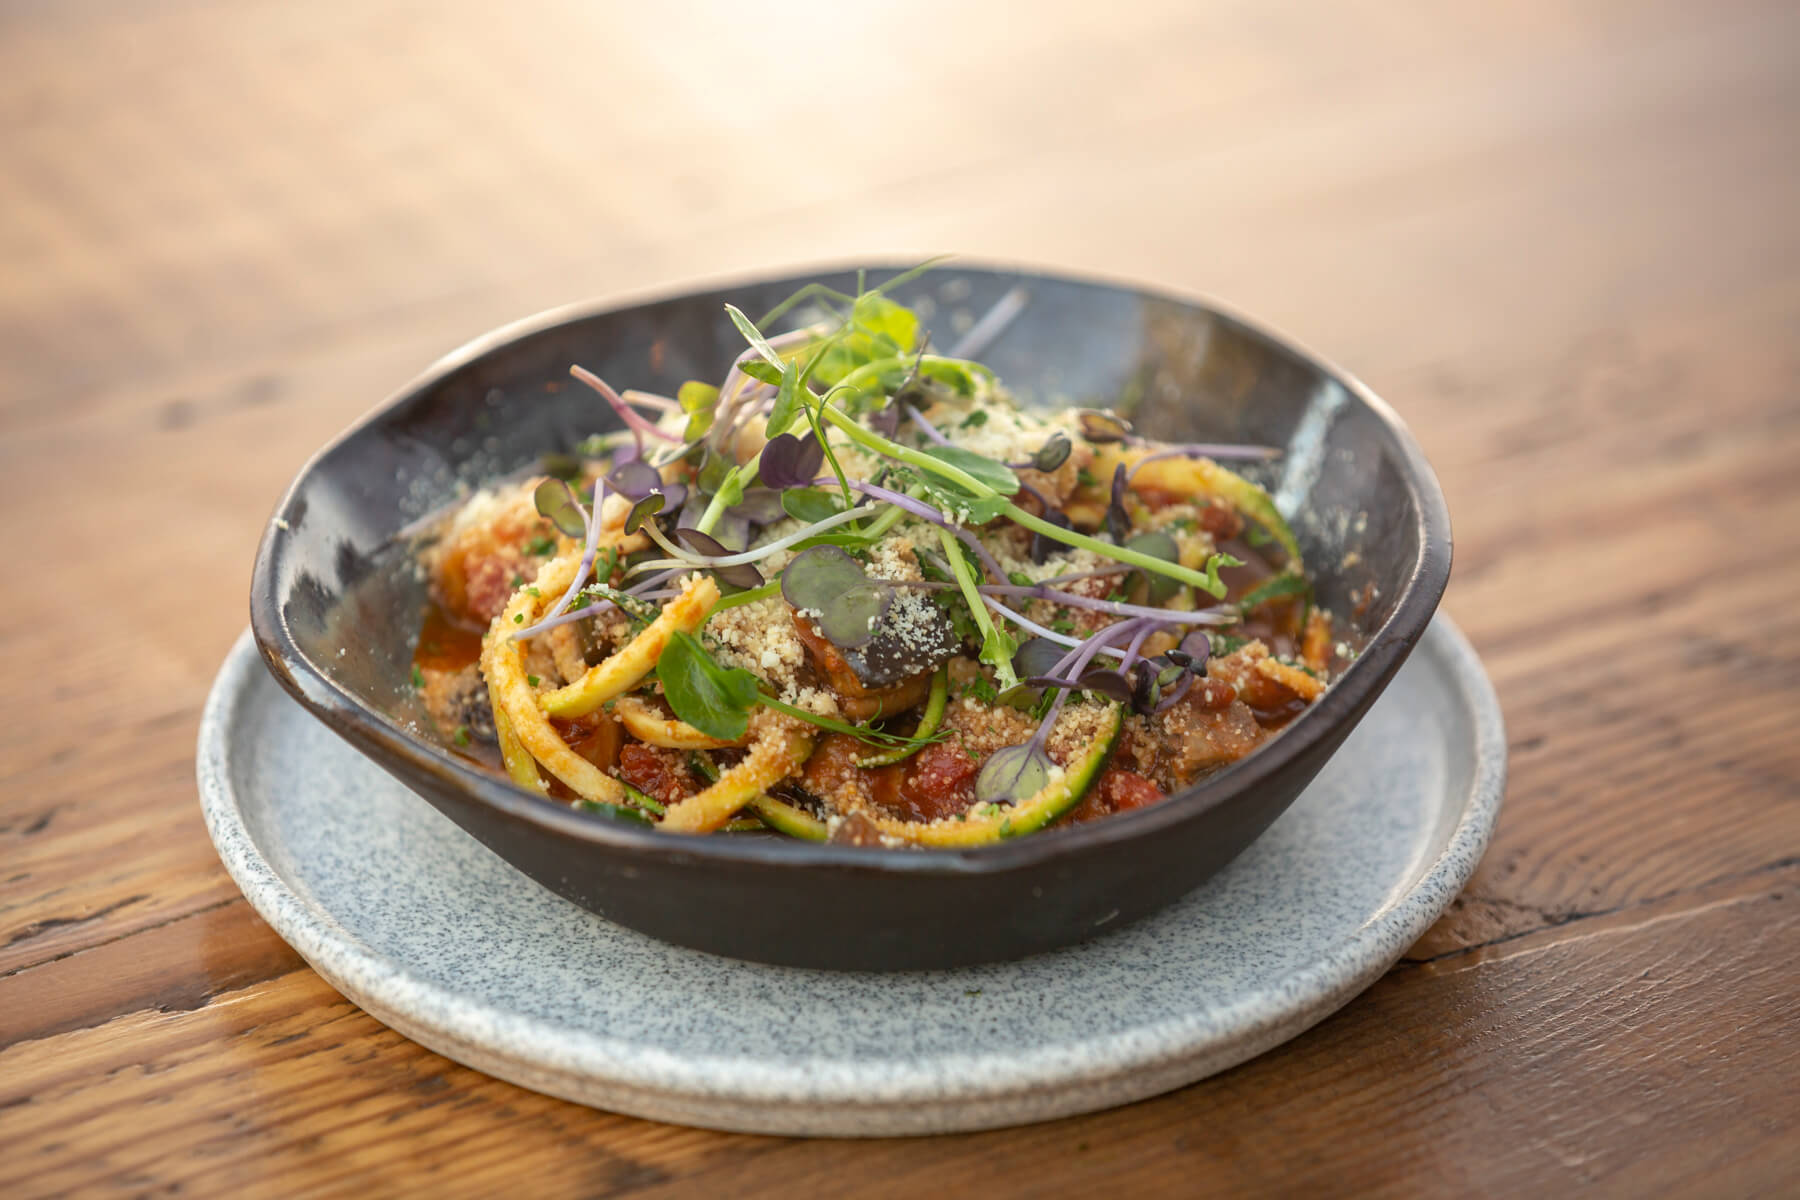 Auckland plant based eatery's organic zucchini spaghetti with eggplant "meatballs" and tomato passata